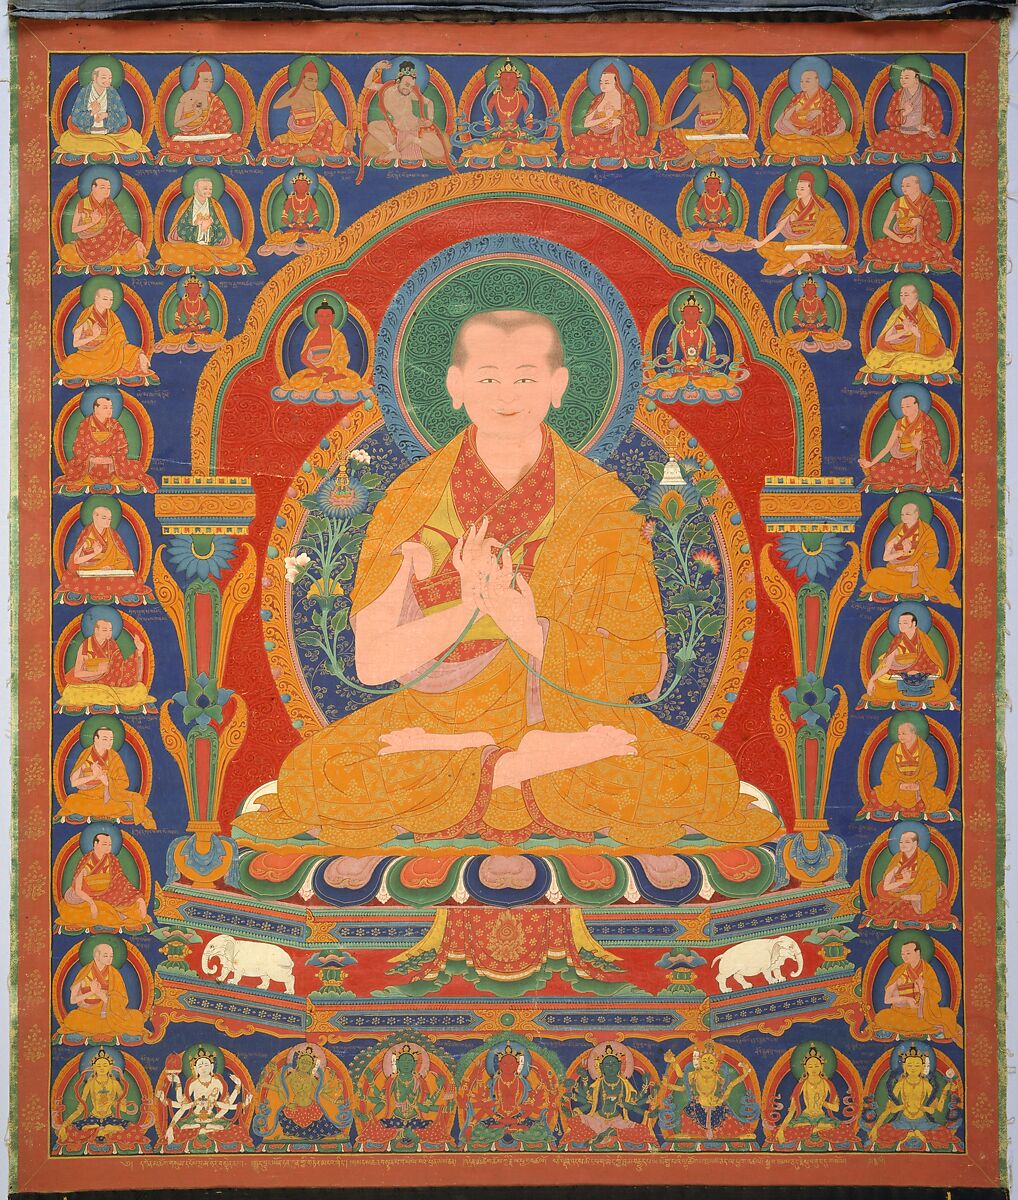 Yong Zin Khon Shogpel: Seventh Abbot of Ngor Monastary, Distemper and gold on cloth, Tibet 